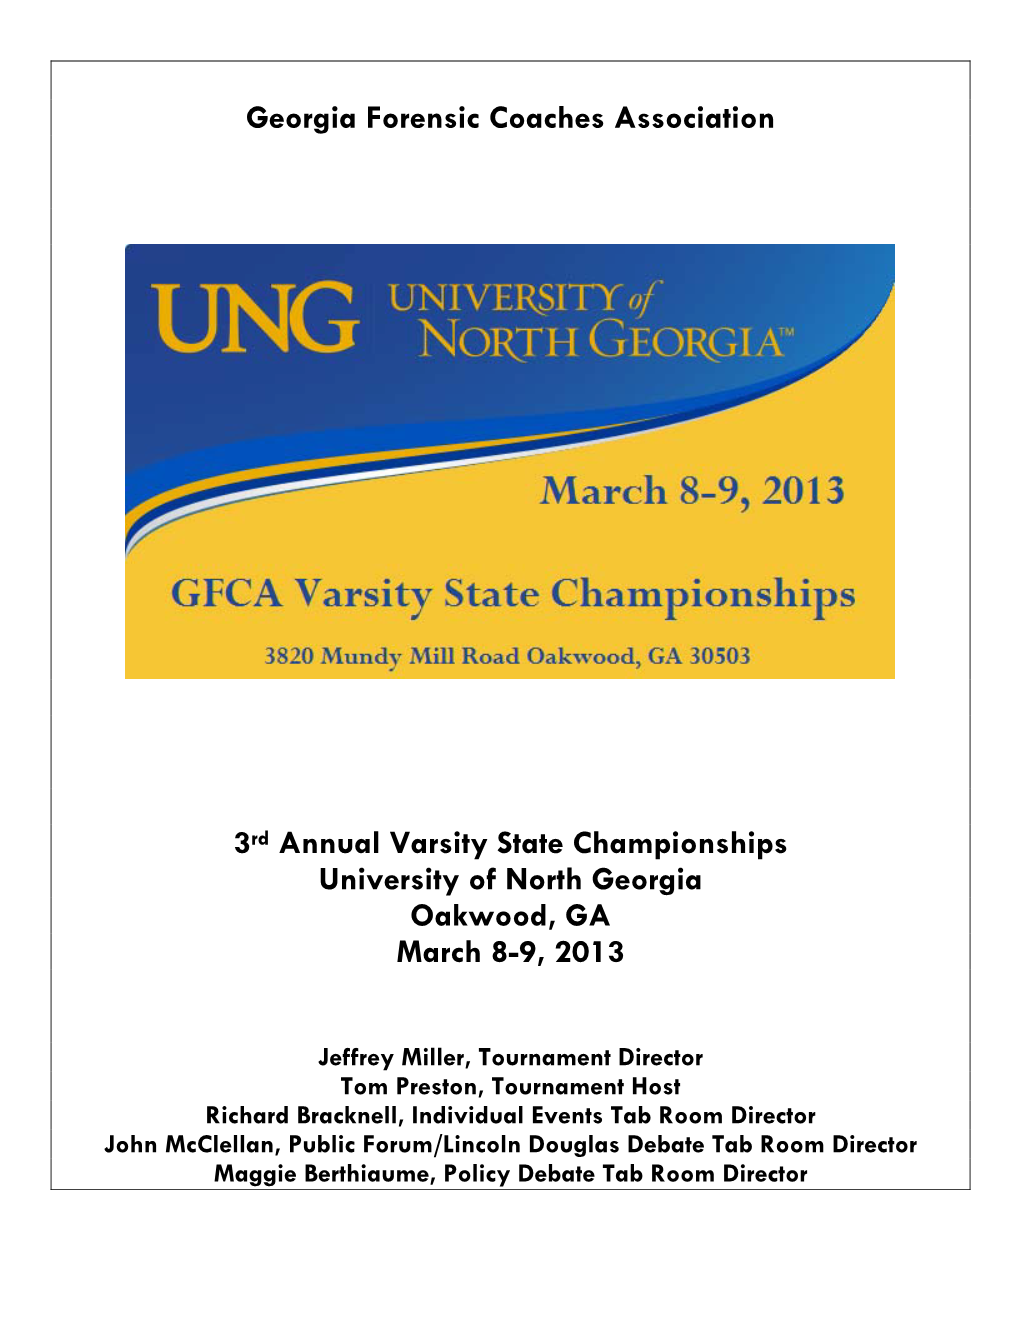 Georgia Forensic Coaches Association 3Rd Annual Varsity State Championships University of North Georgia Oakwood, GA March 8-9, 2